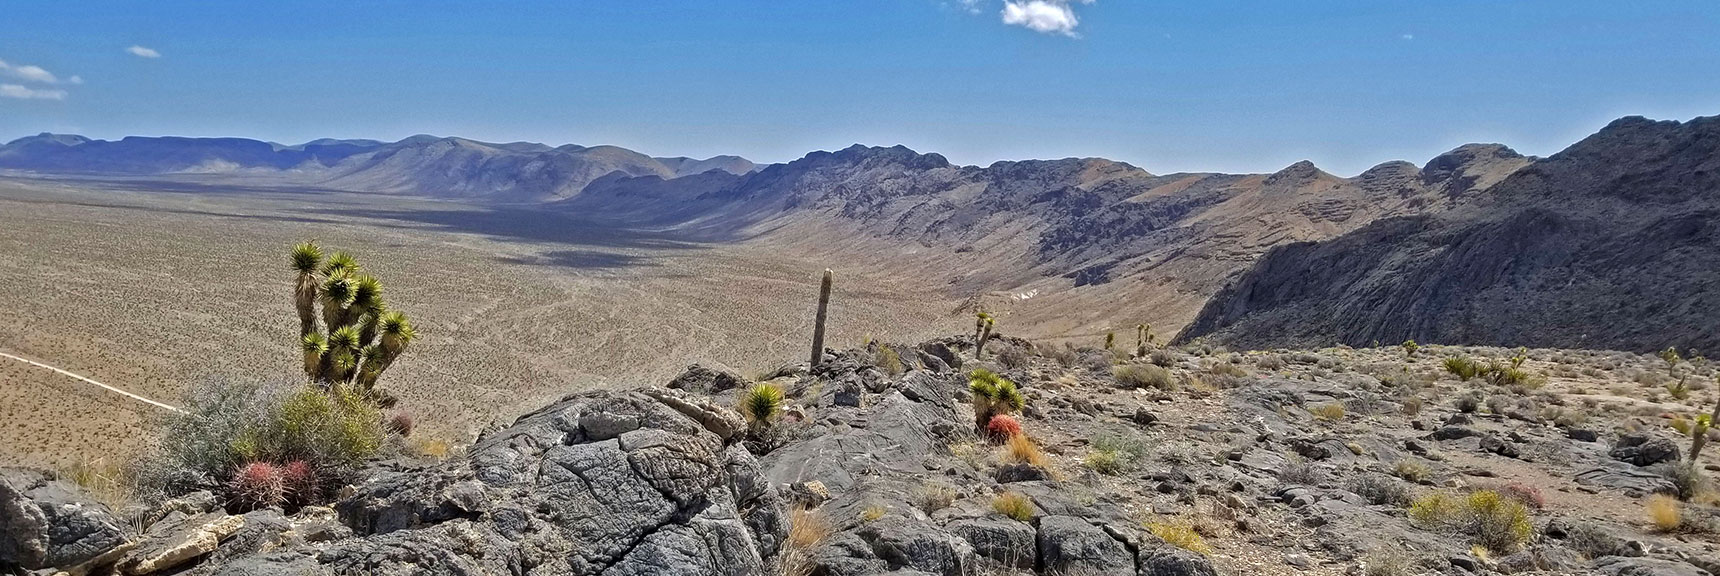 Far Eastern Fossil Ridge Stretching Out Toward Distant Las Vegas Range | Fossil Ridge End to End | Sheep Range | Desert National Wildlife Refuge, Nevada